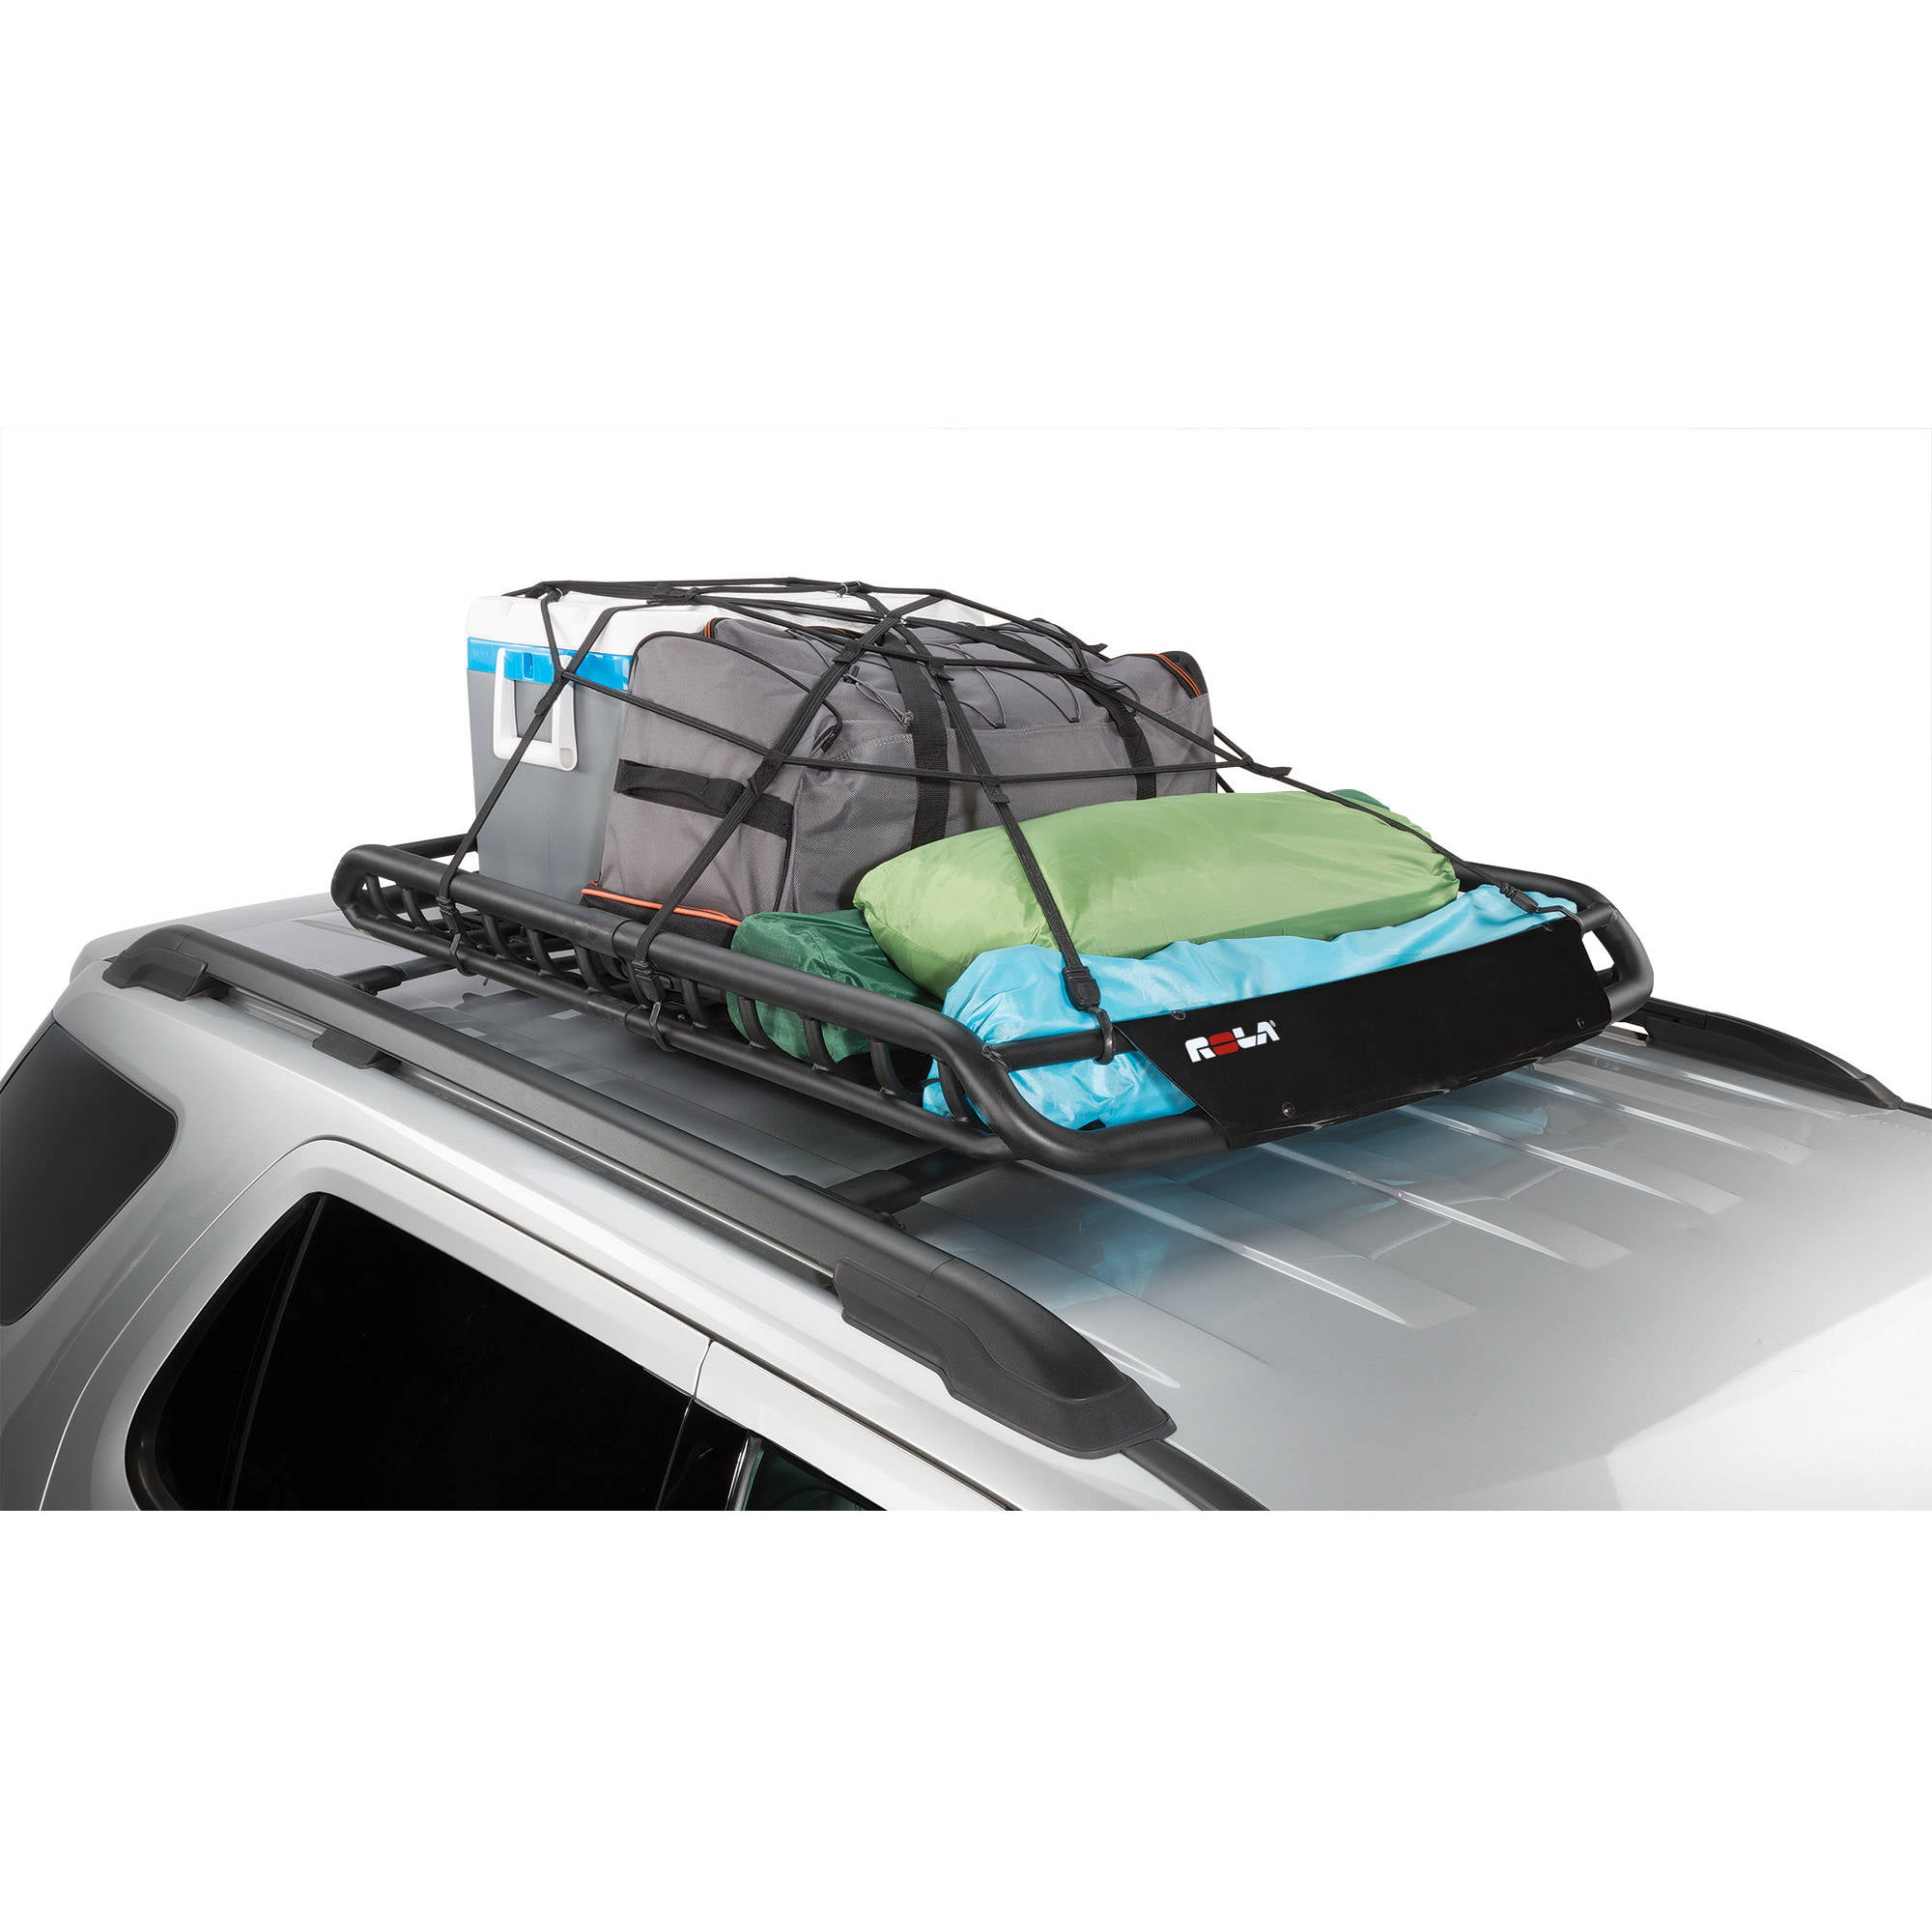 Car Roof Racks. New Products. 2x For Toyota Prado Fj120 